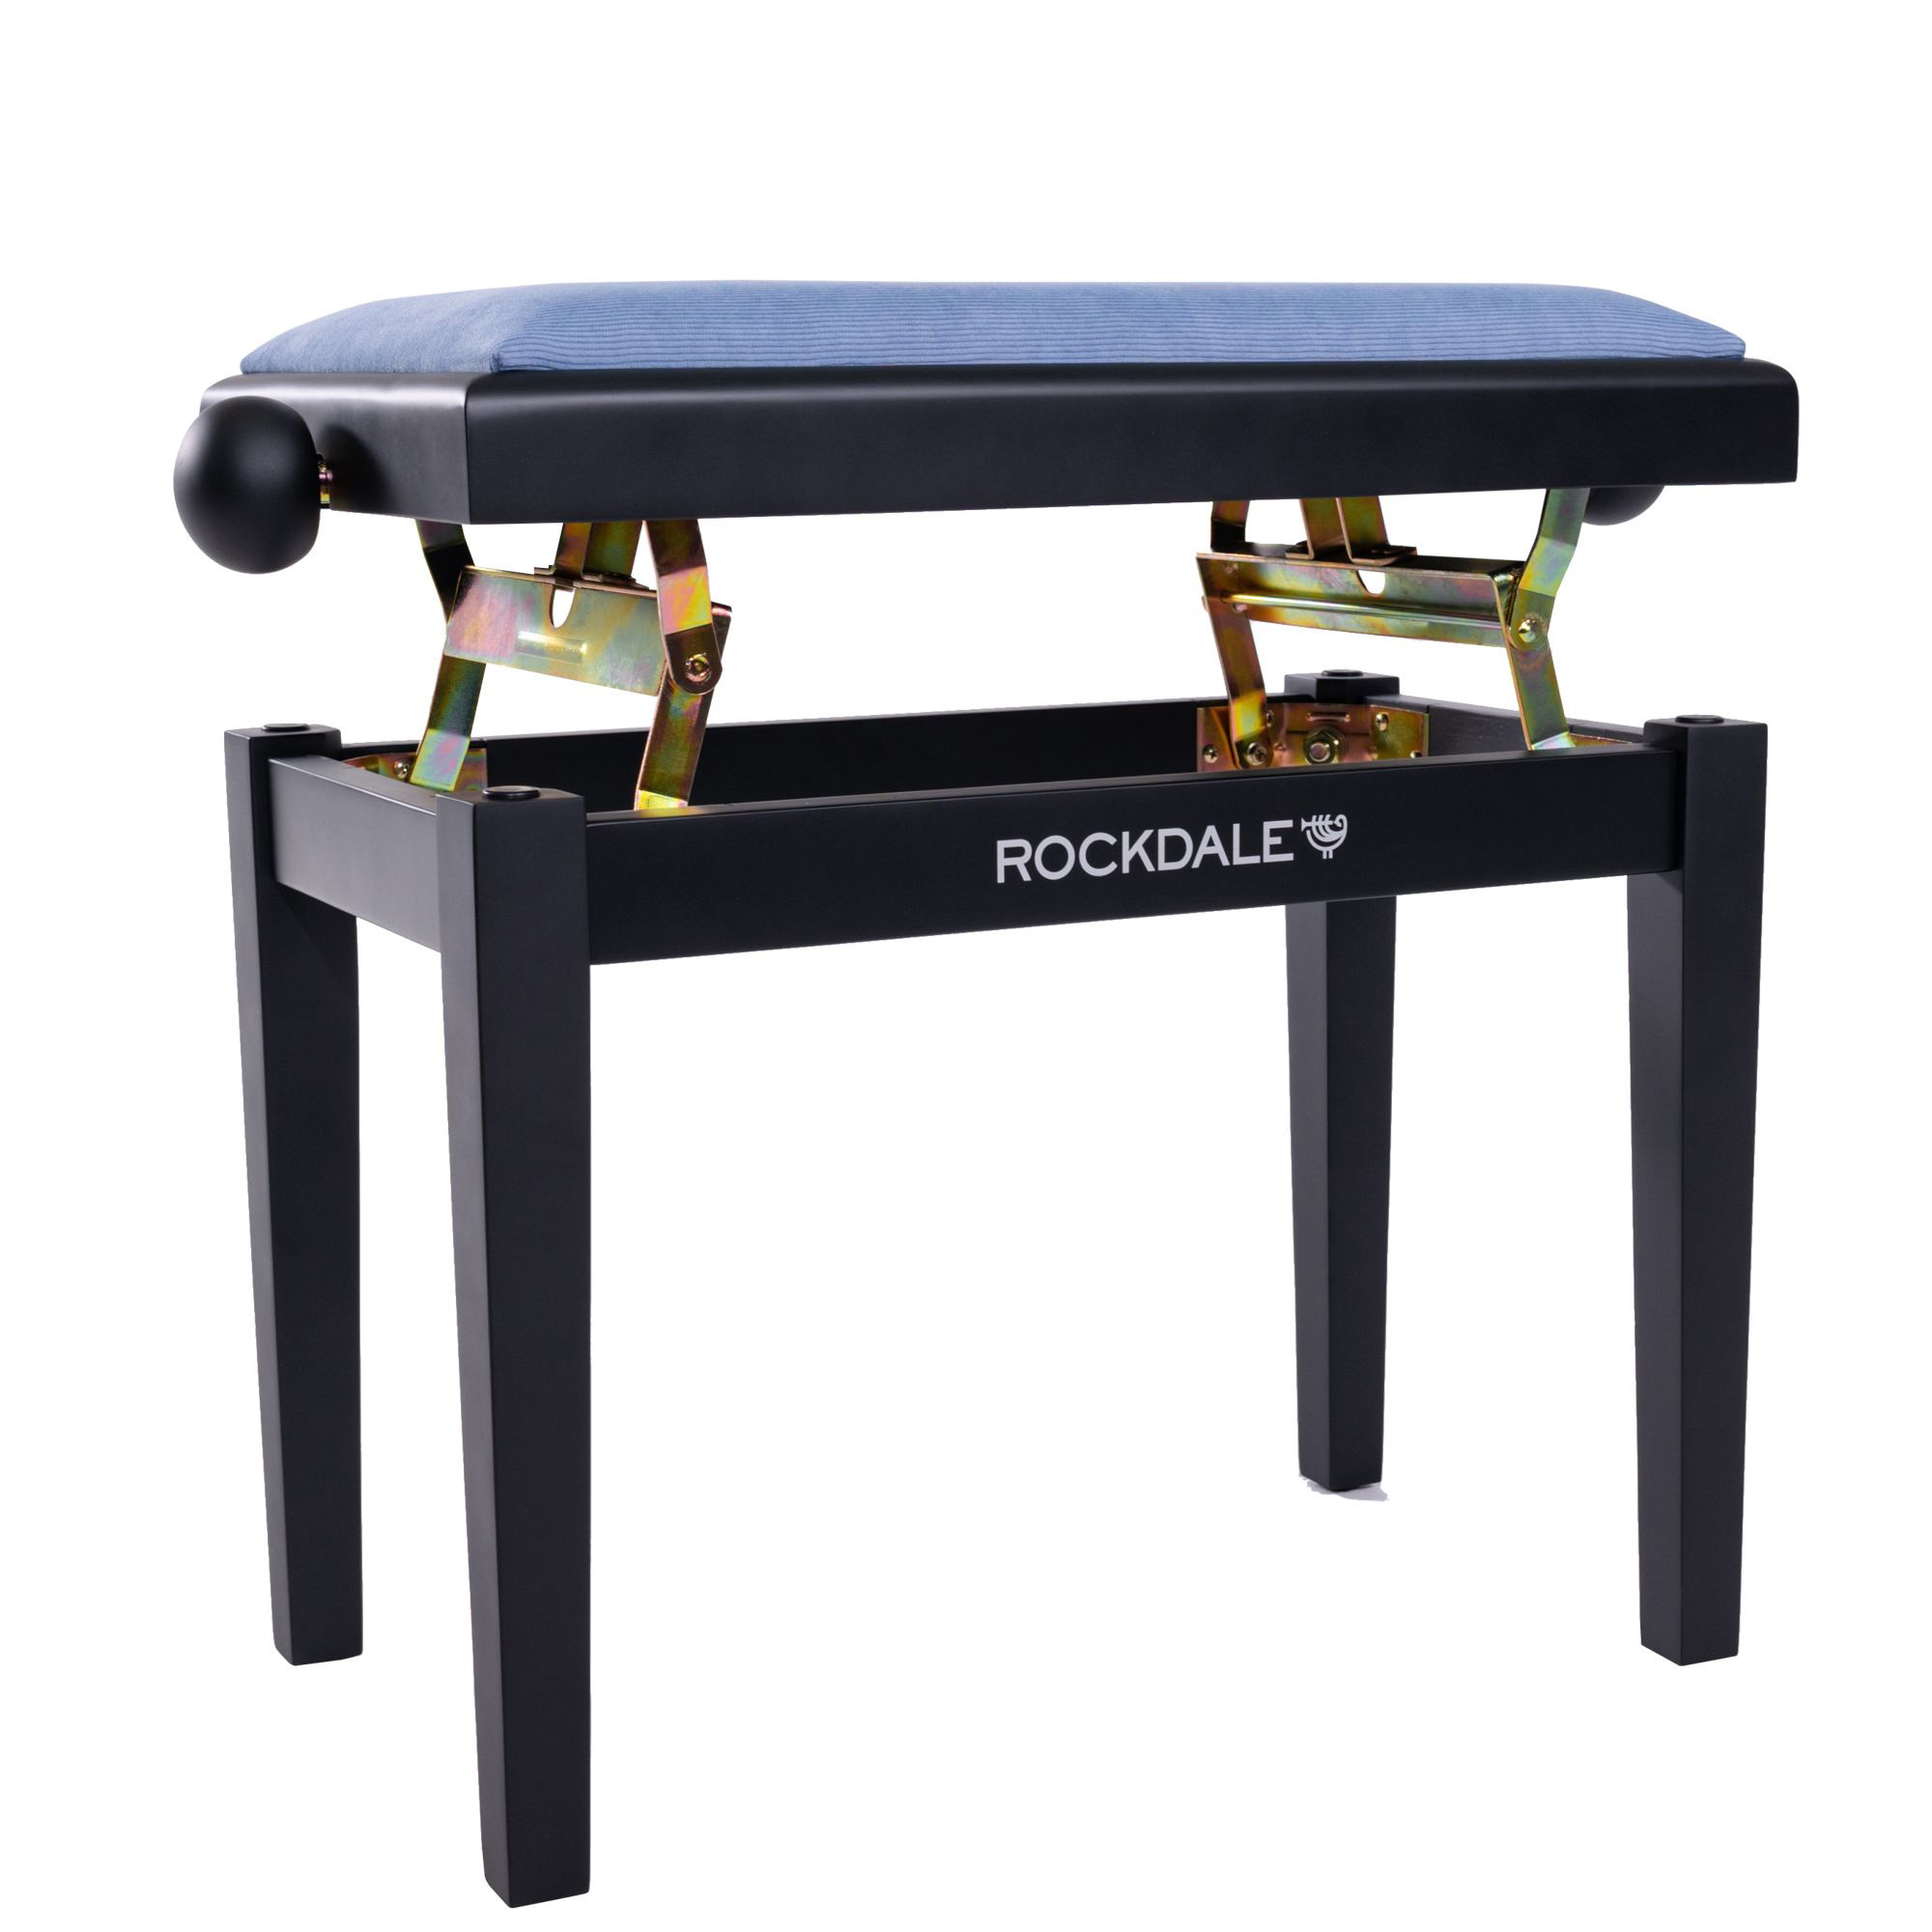 Rockdale RHAPSODY 131 BLACK ROYAL BLUE Банкетки для клавишных инструментов